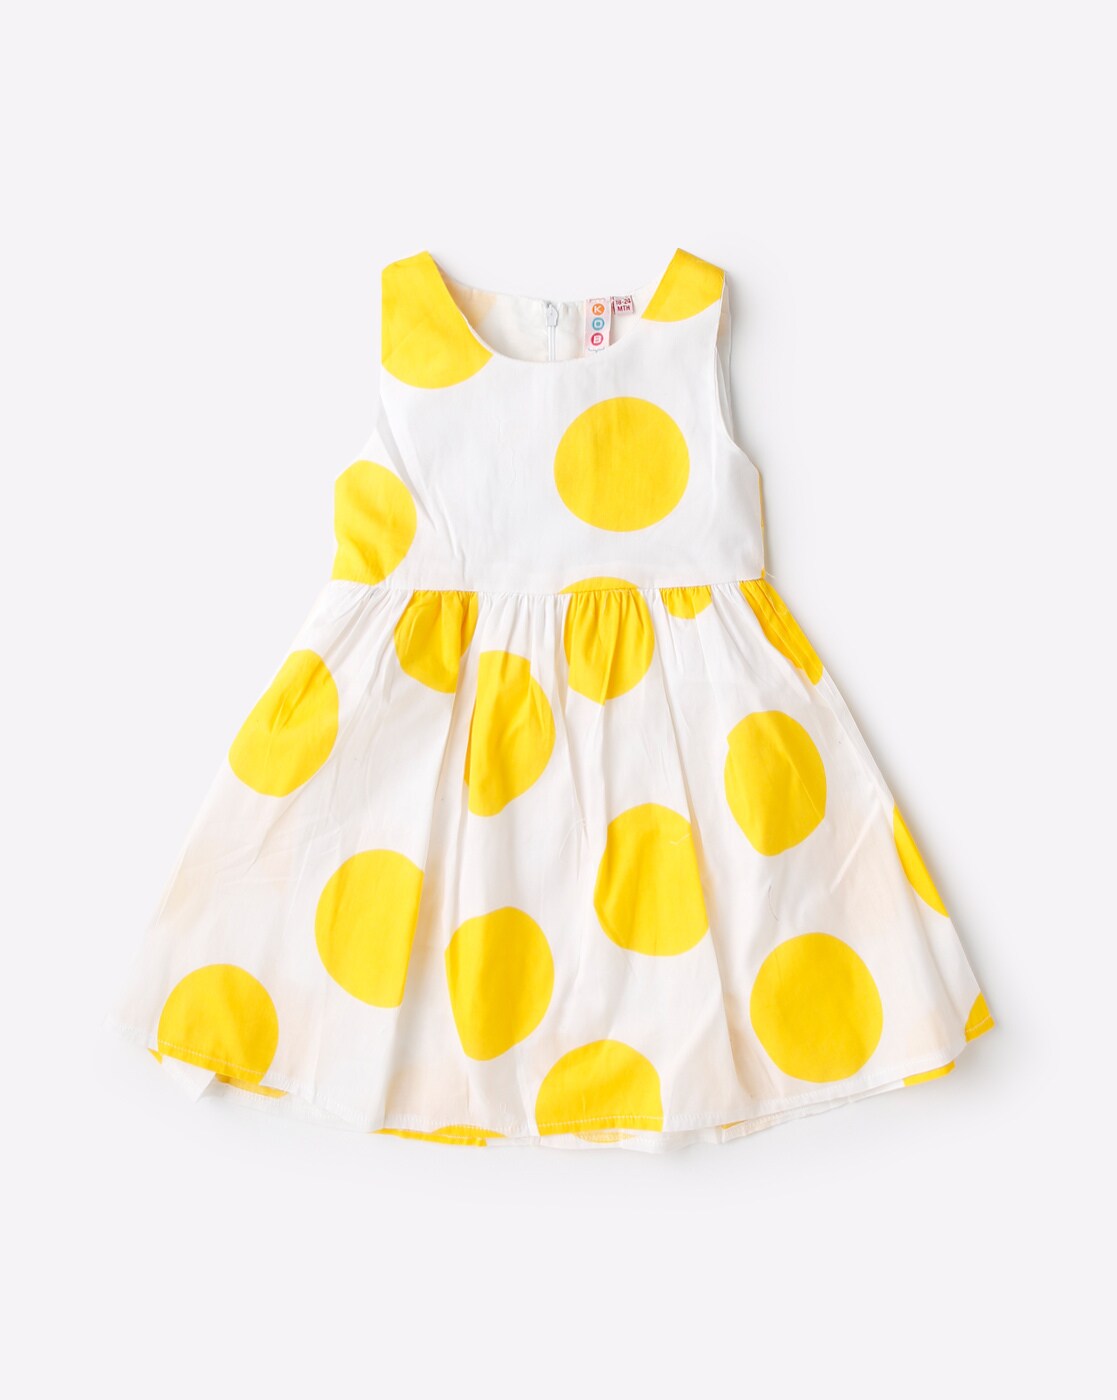 yellow polka dot dress girls